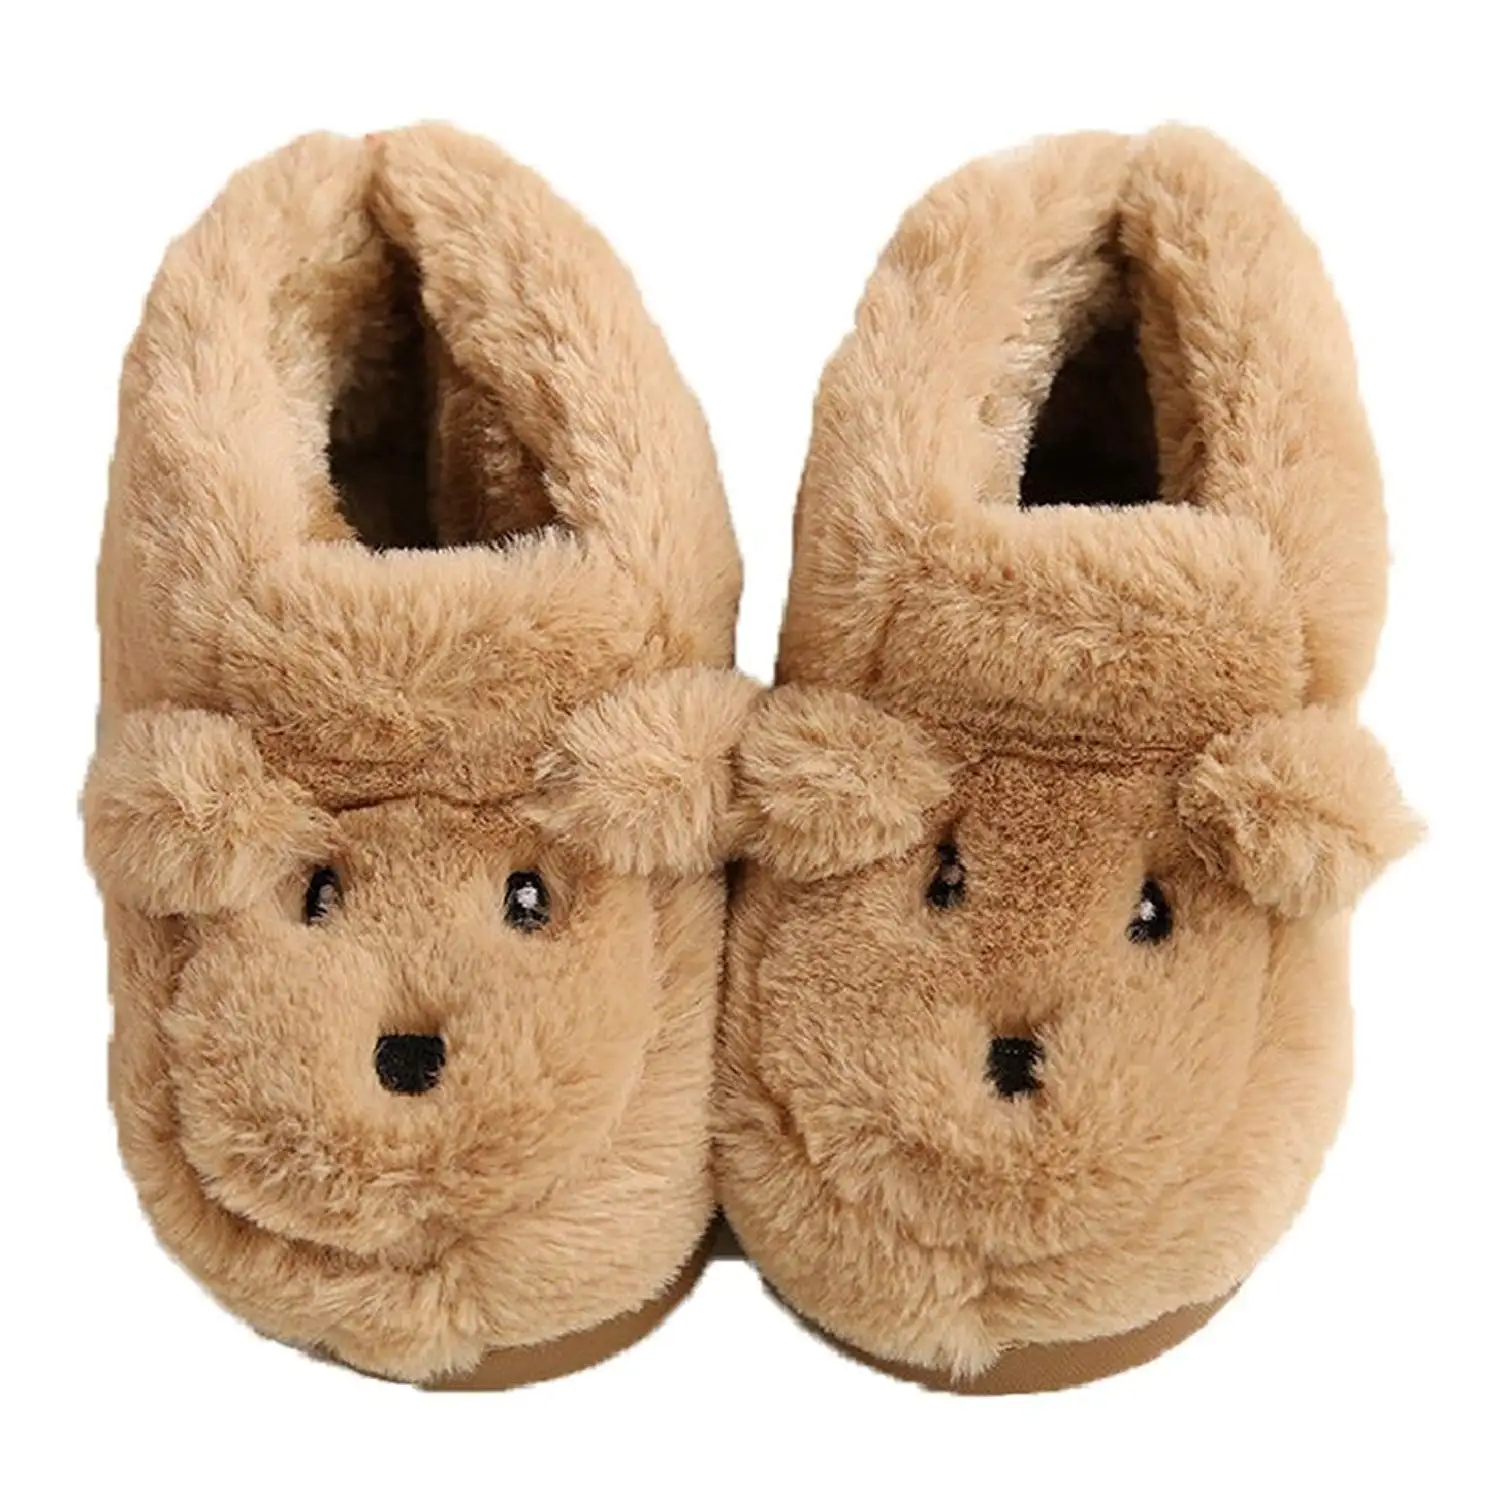 buy boys slippers